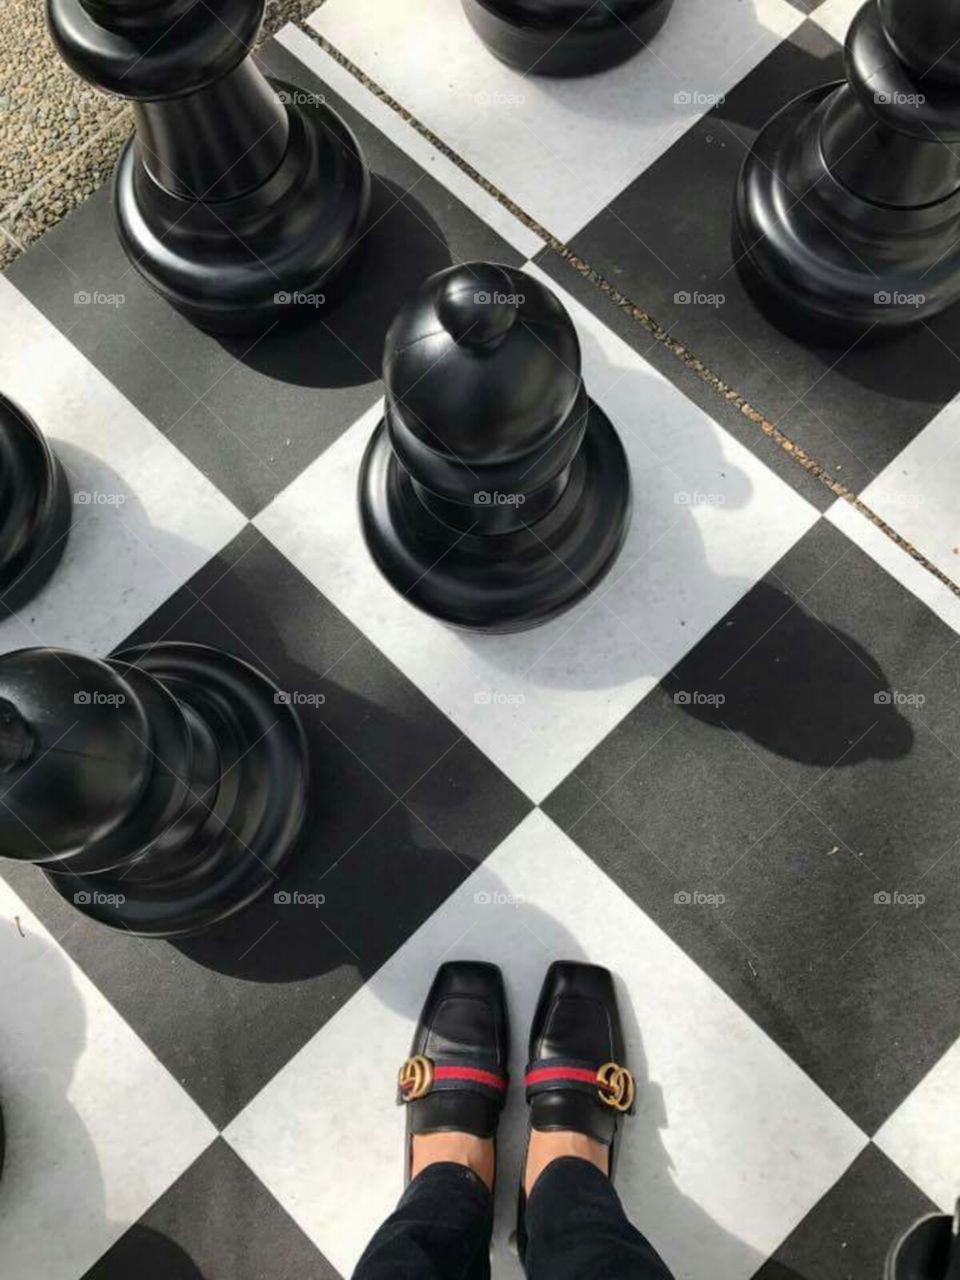 Black and White Chessmat